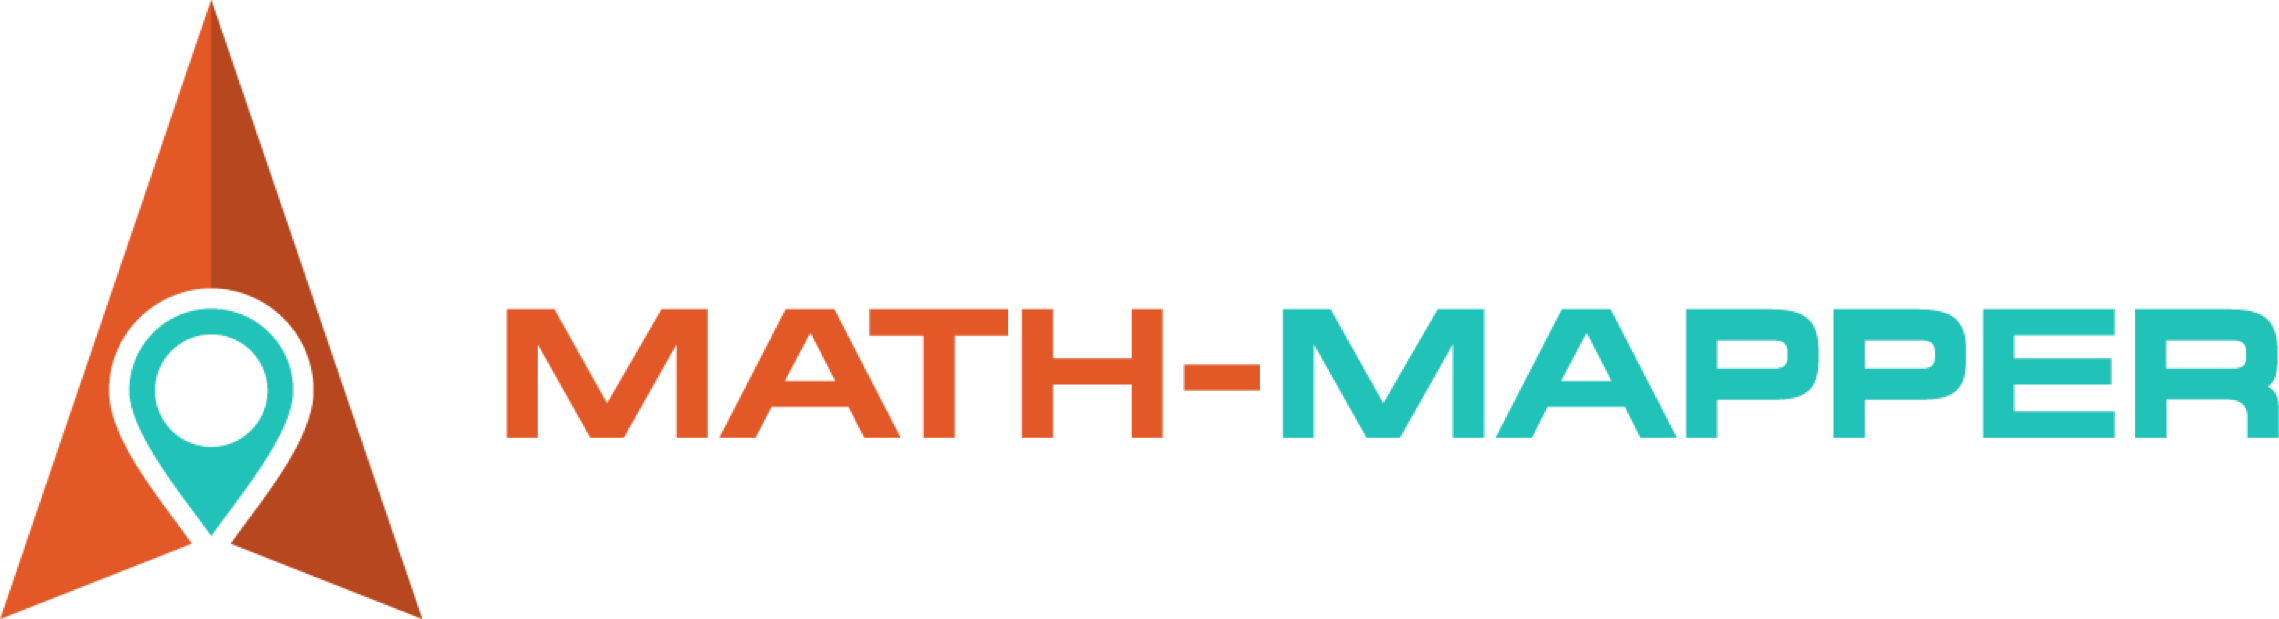 mathmapper logo